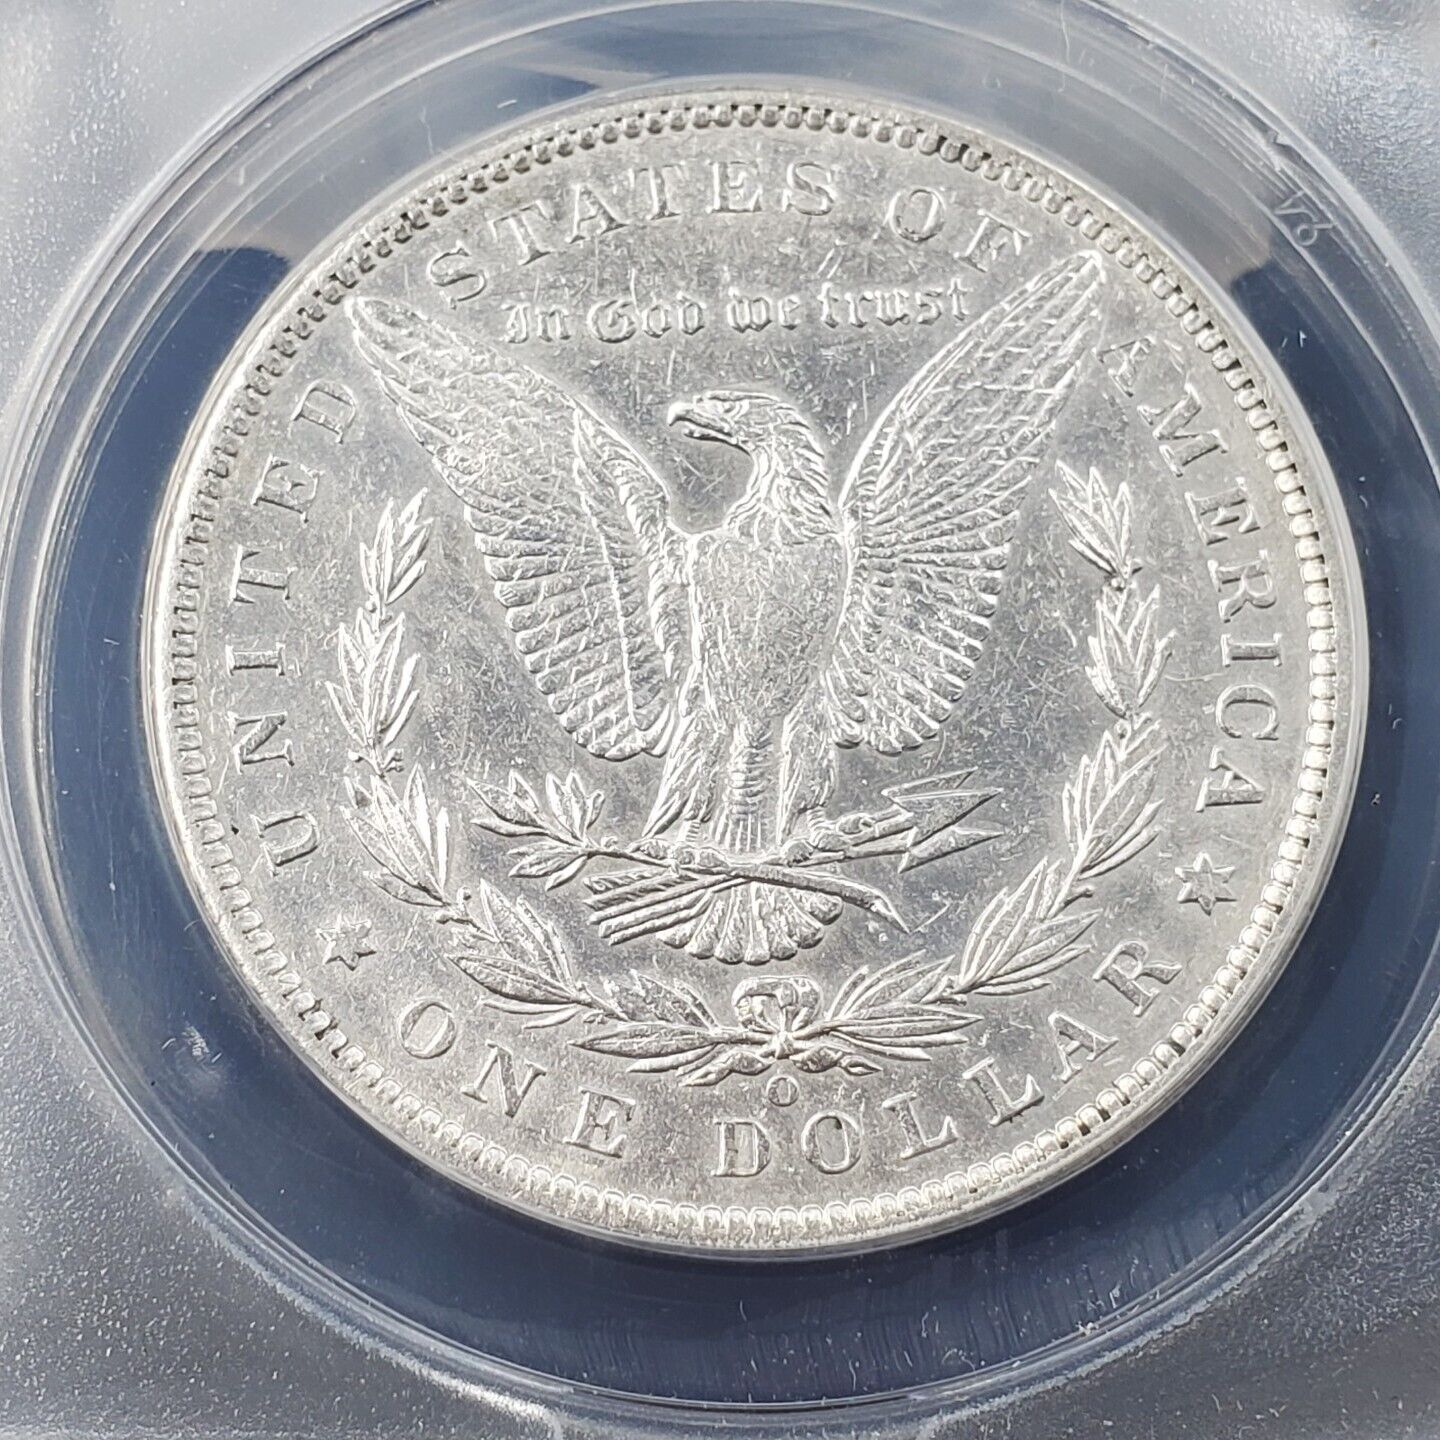 1886 O $1 Morgan Silver Eagle Dollar Coin CLEANED ANACS AU53 DETAILS